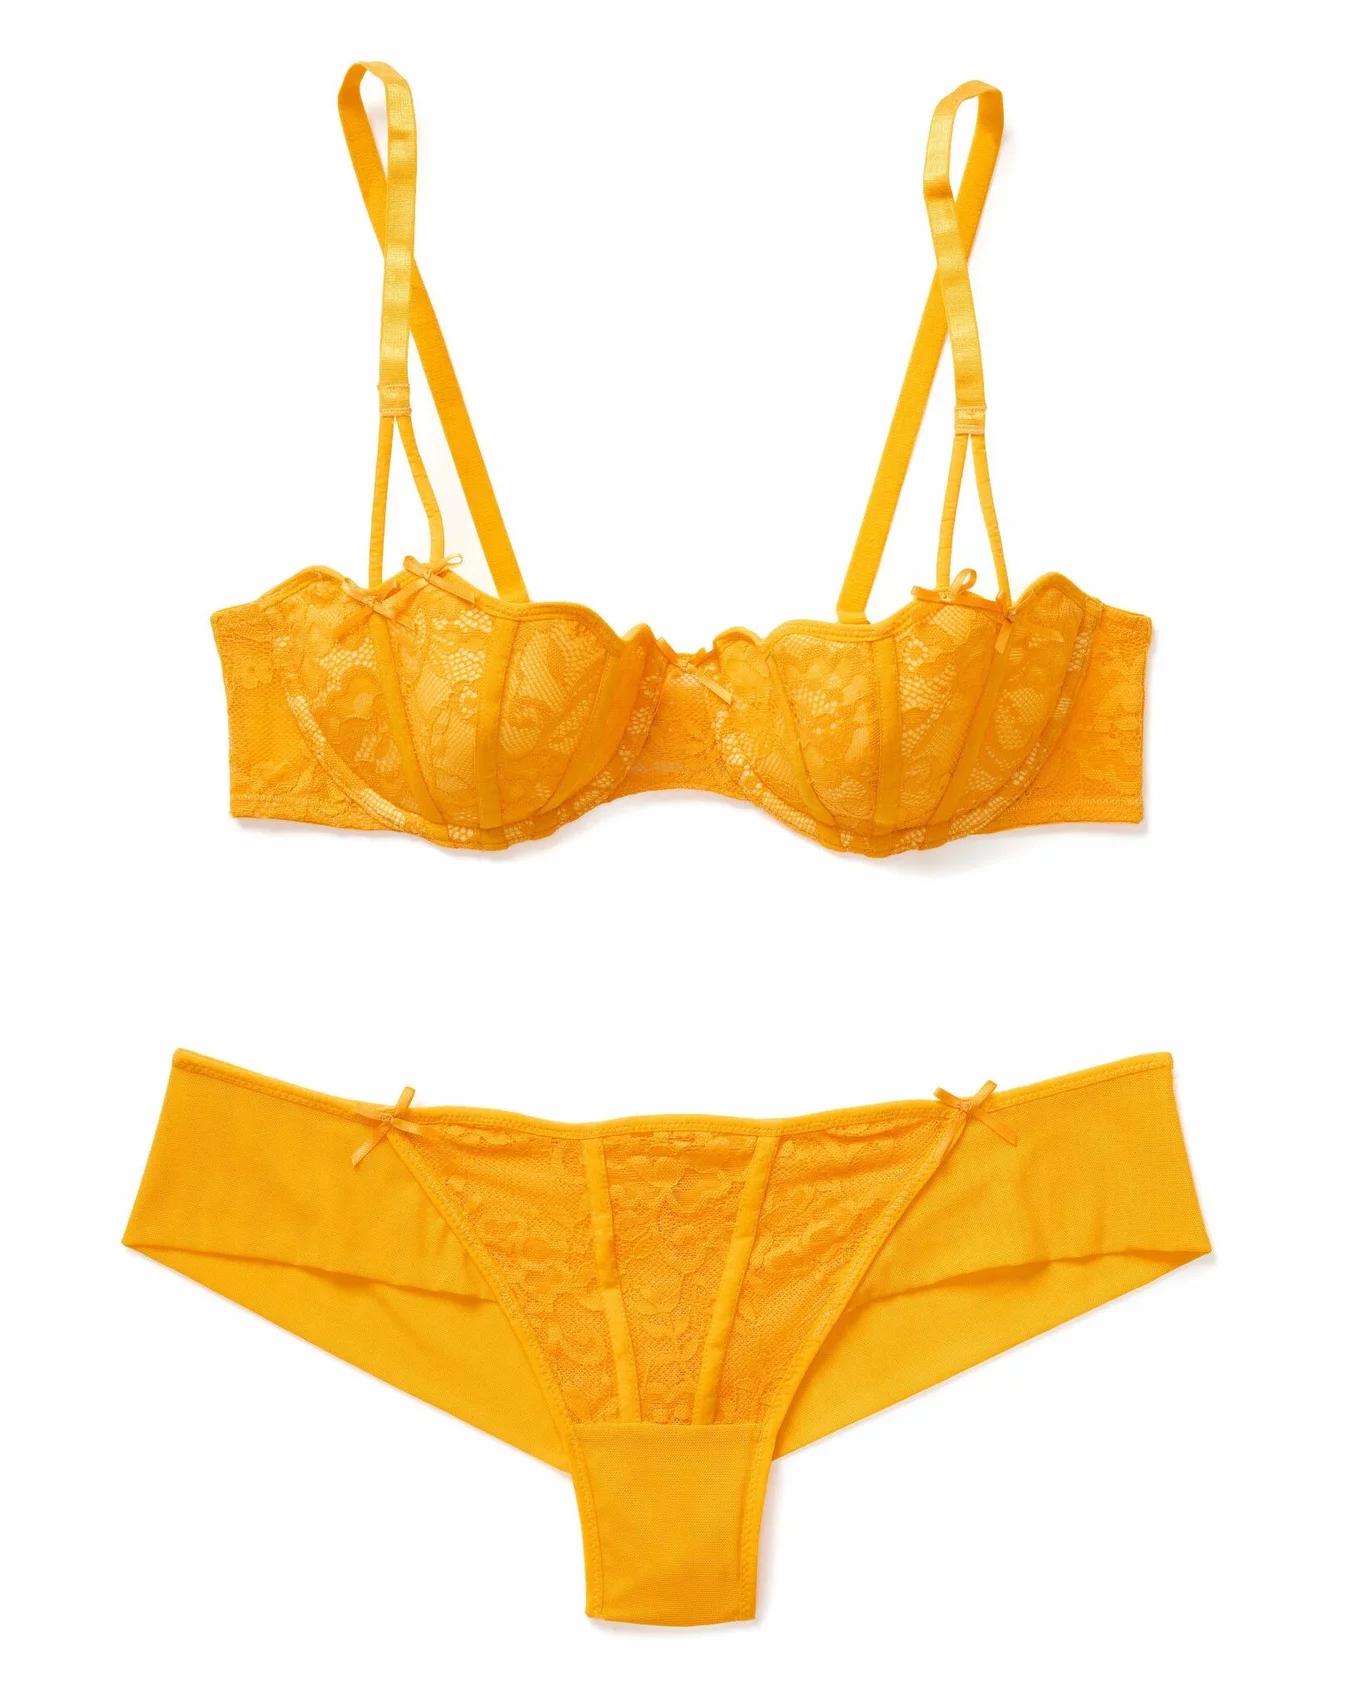 Yellow lingerie set